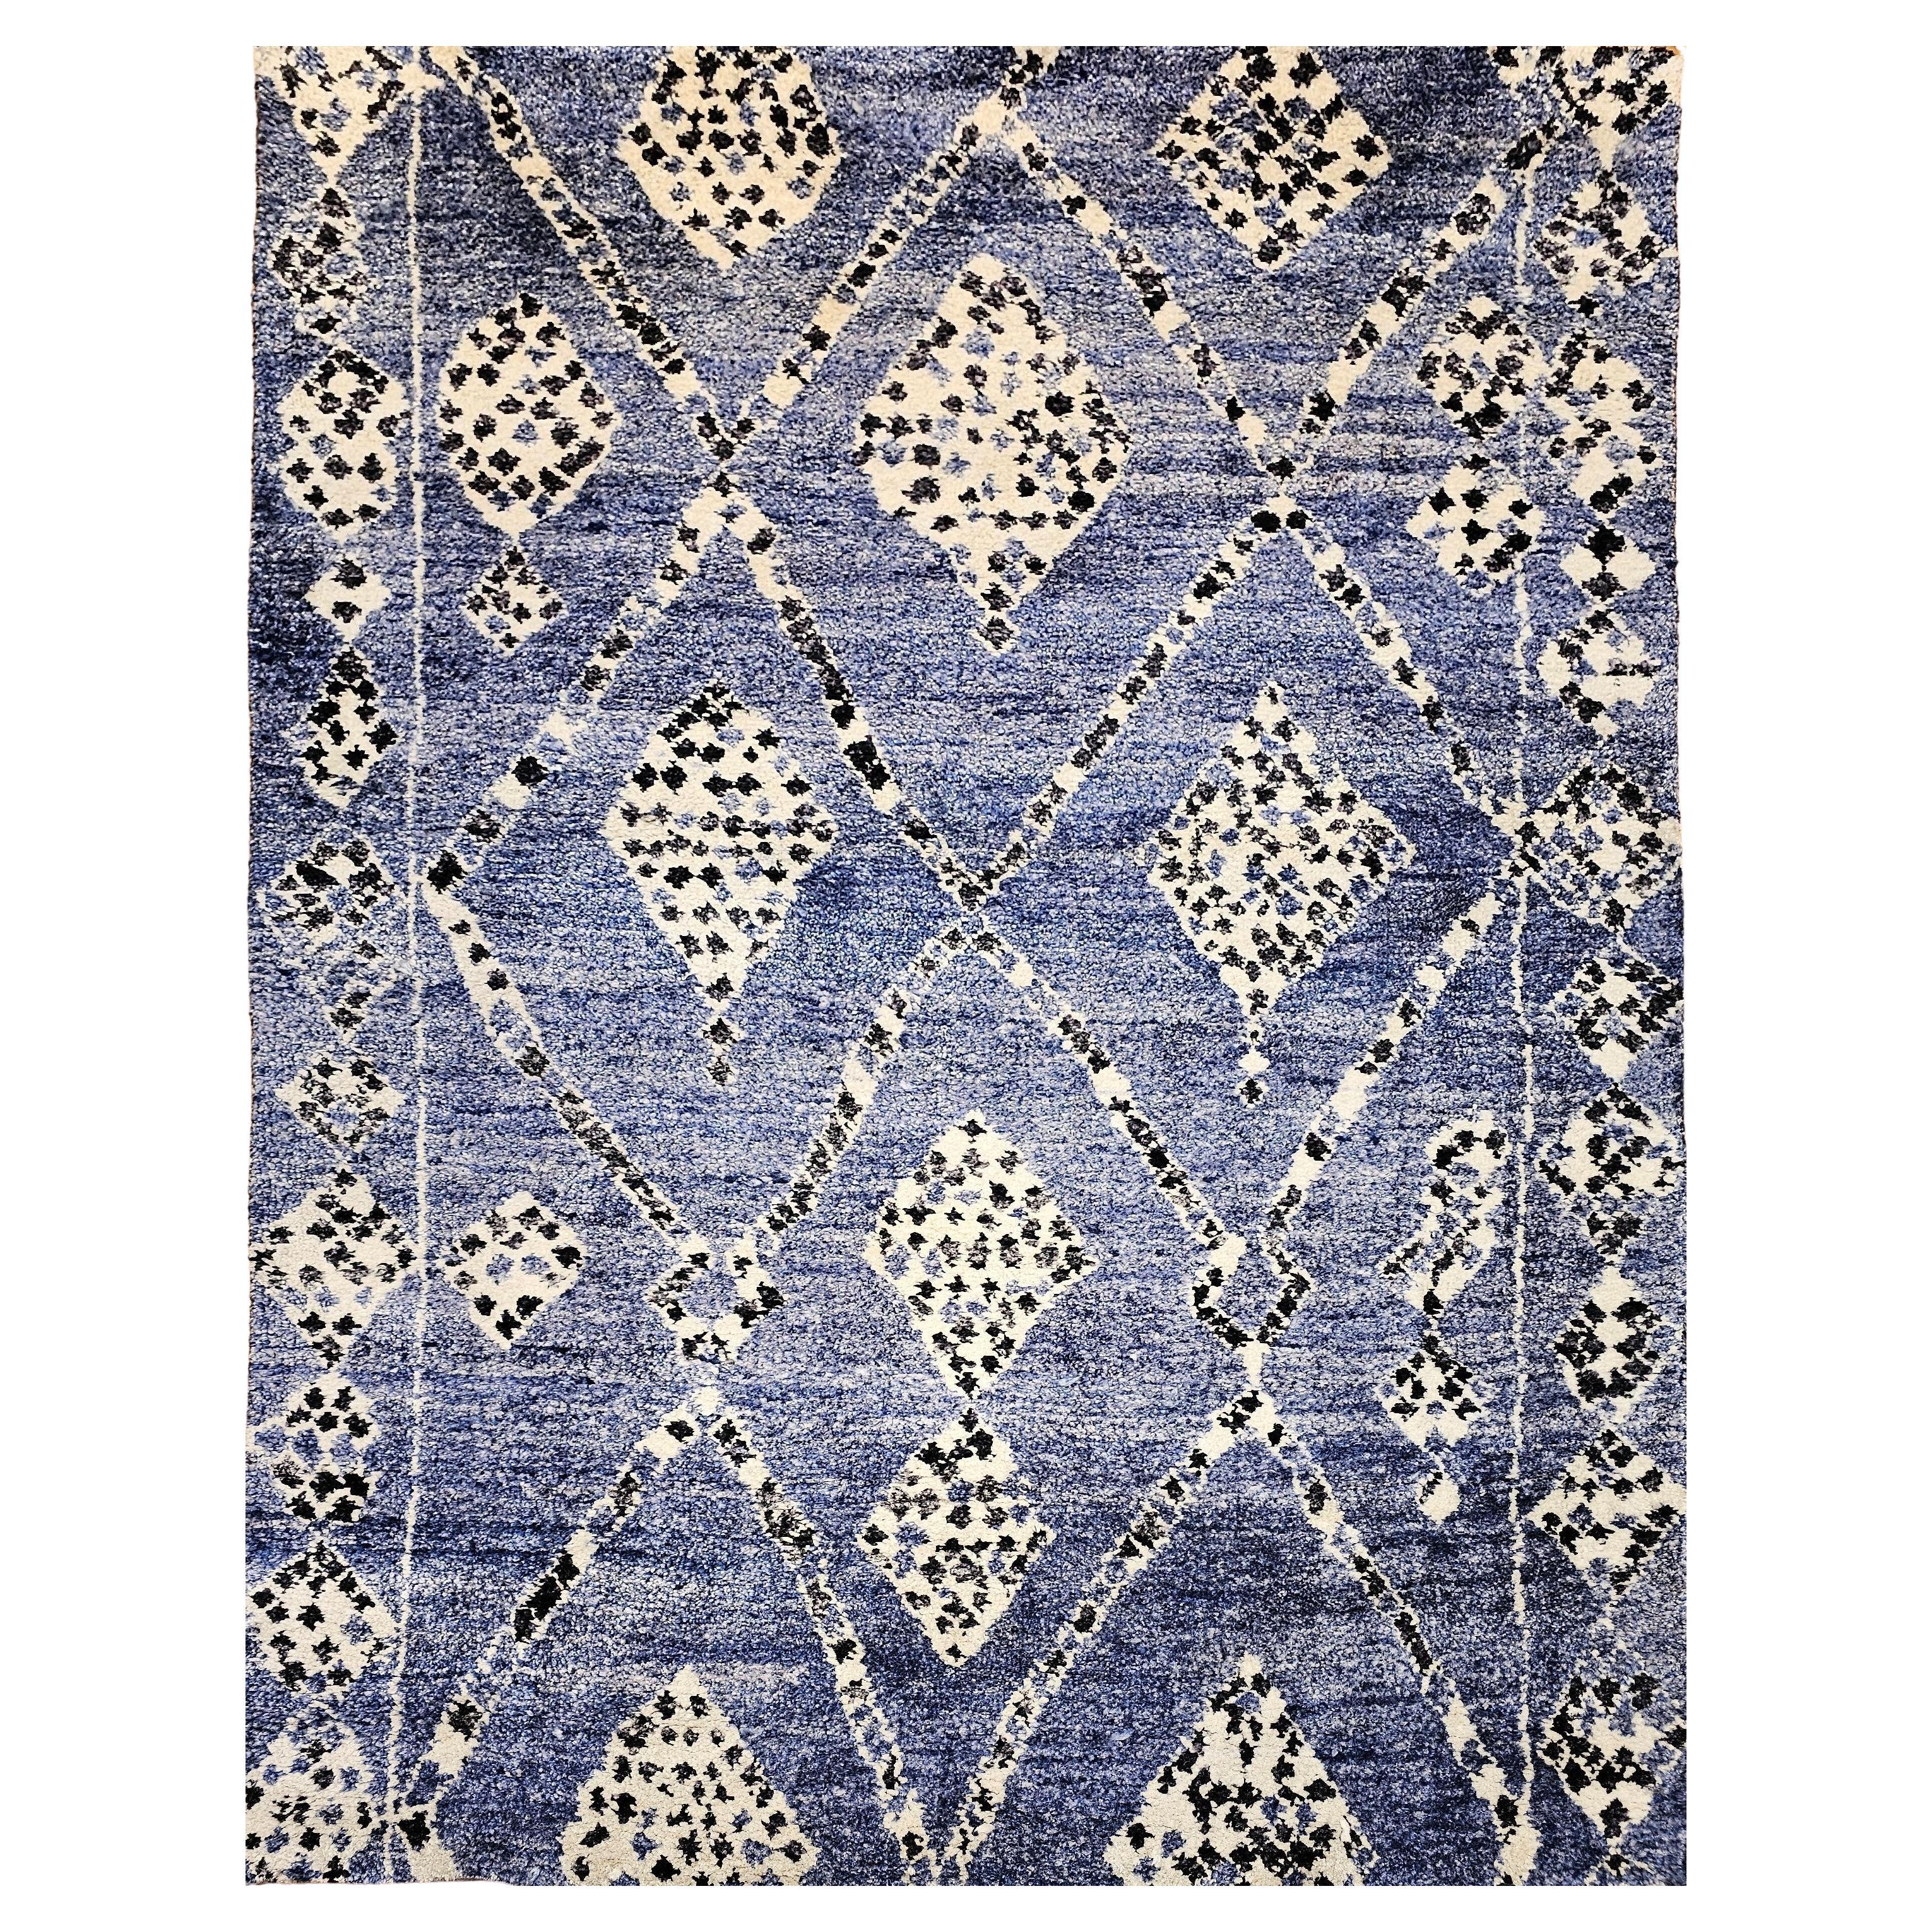 Vintage Mid Century Moroccan Rug in Allover Pattern in Pale Indigo, Navy, Ivory